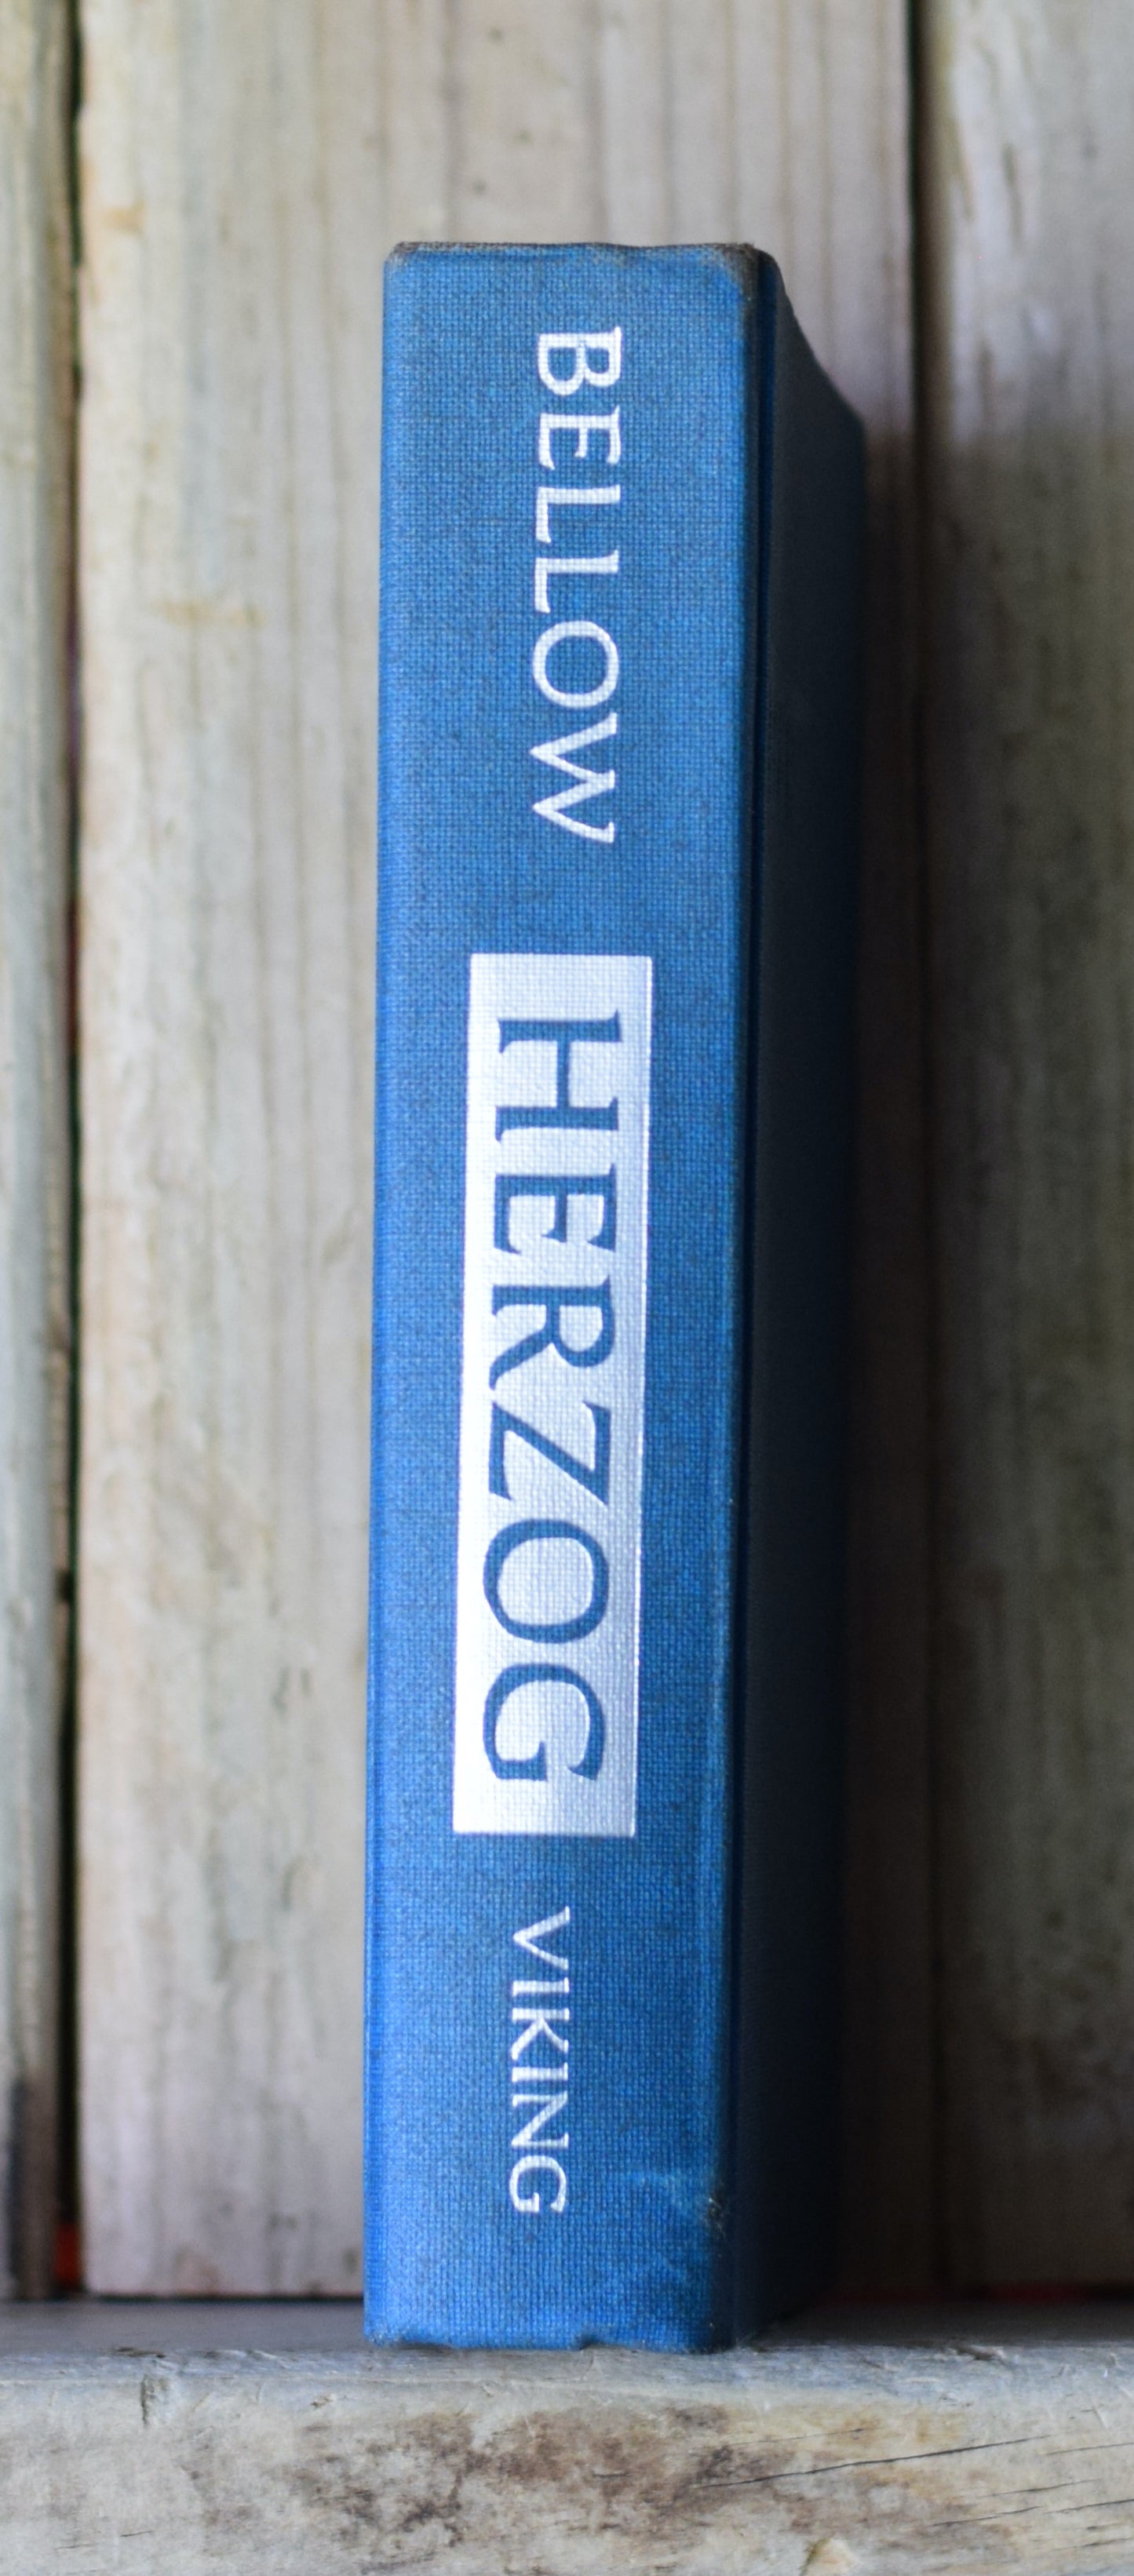 Vintage Fiction Hardback: Saul Bellow - Herzog FIRST EDITION